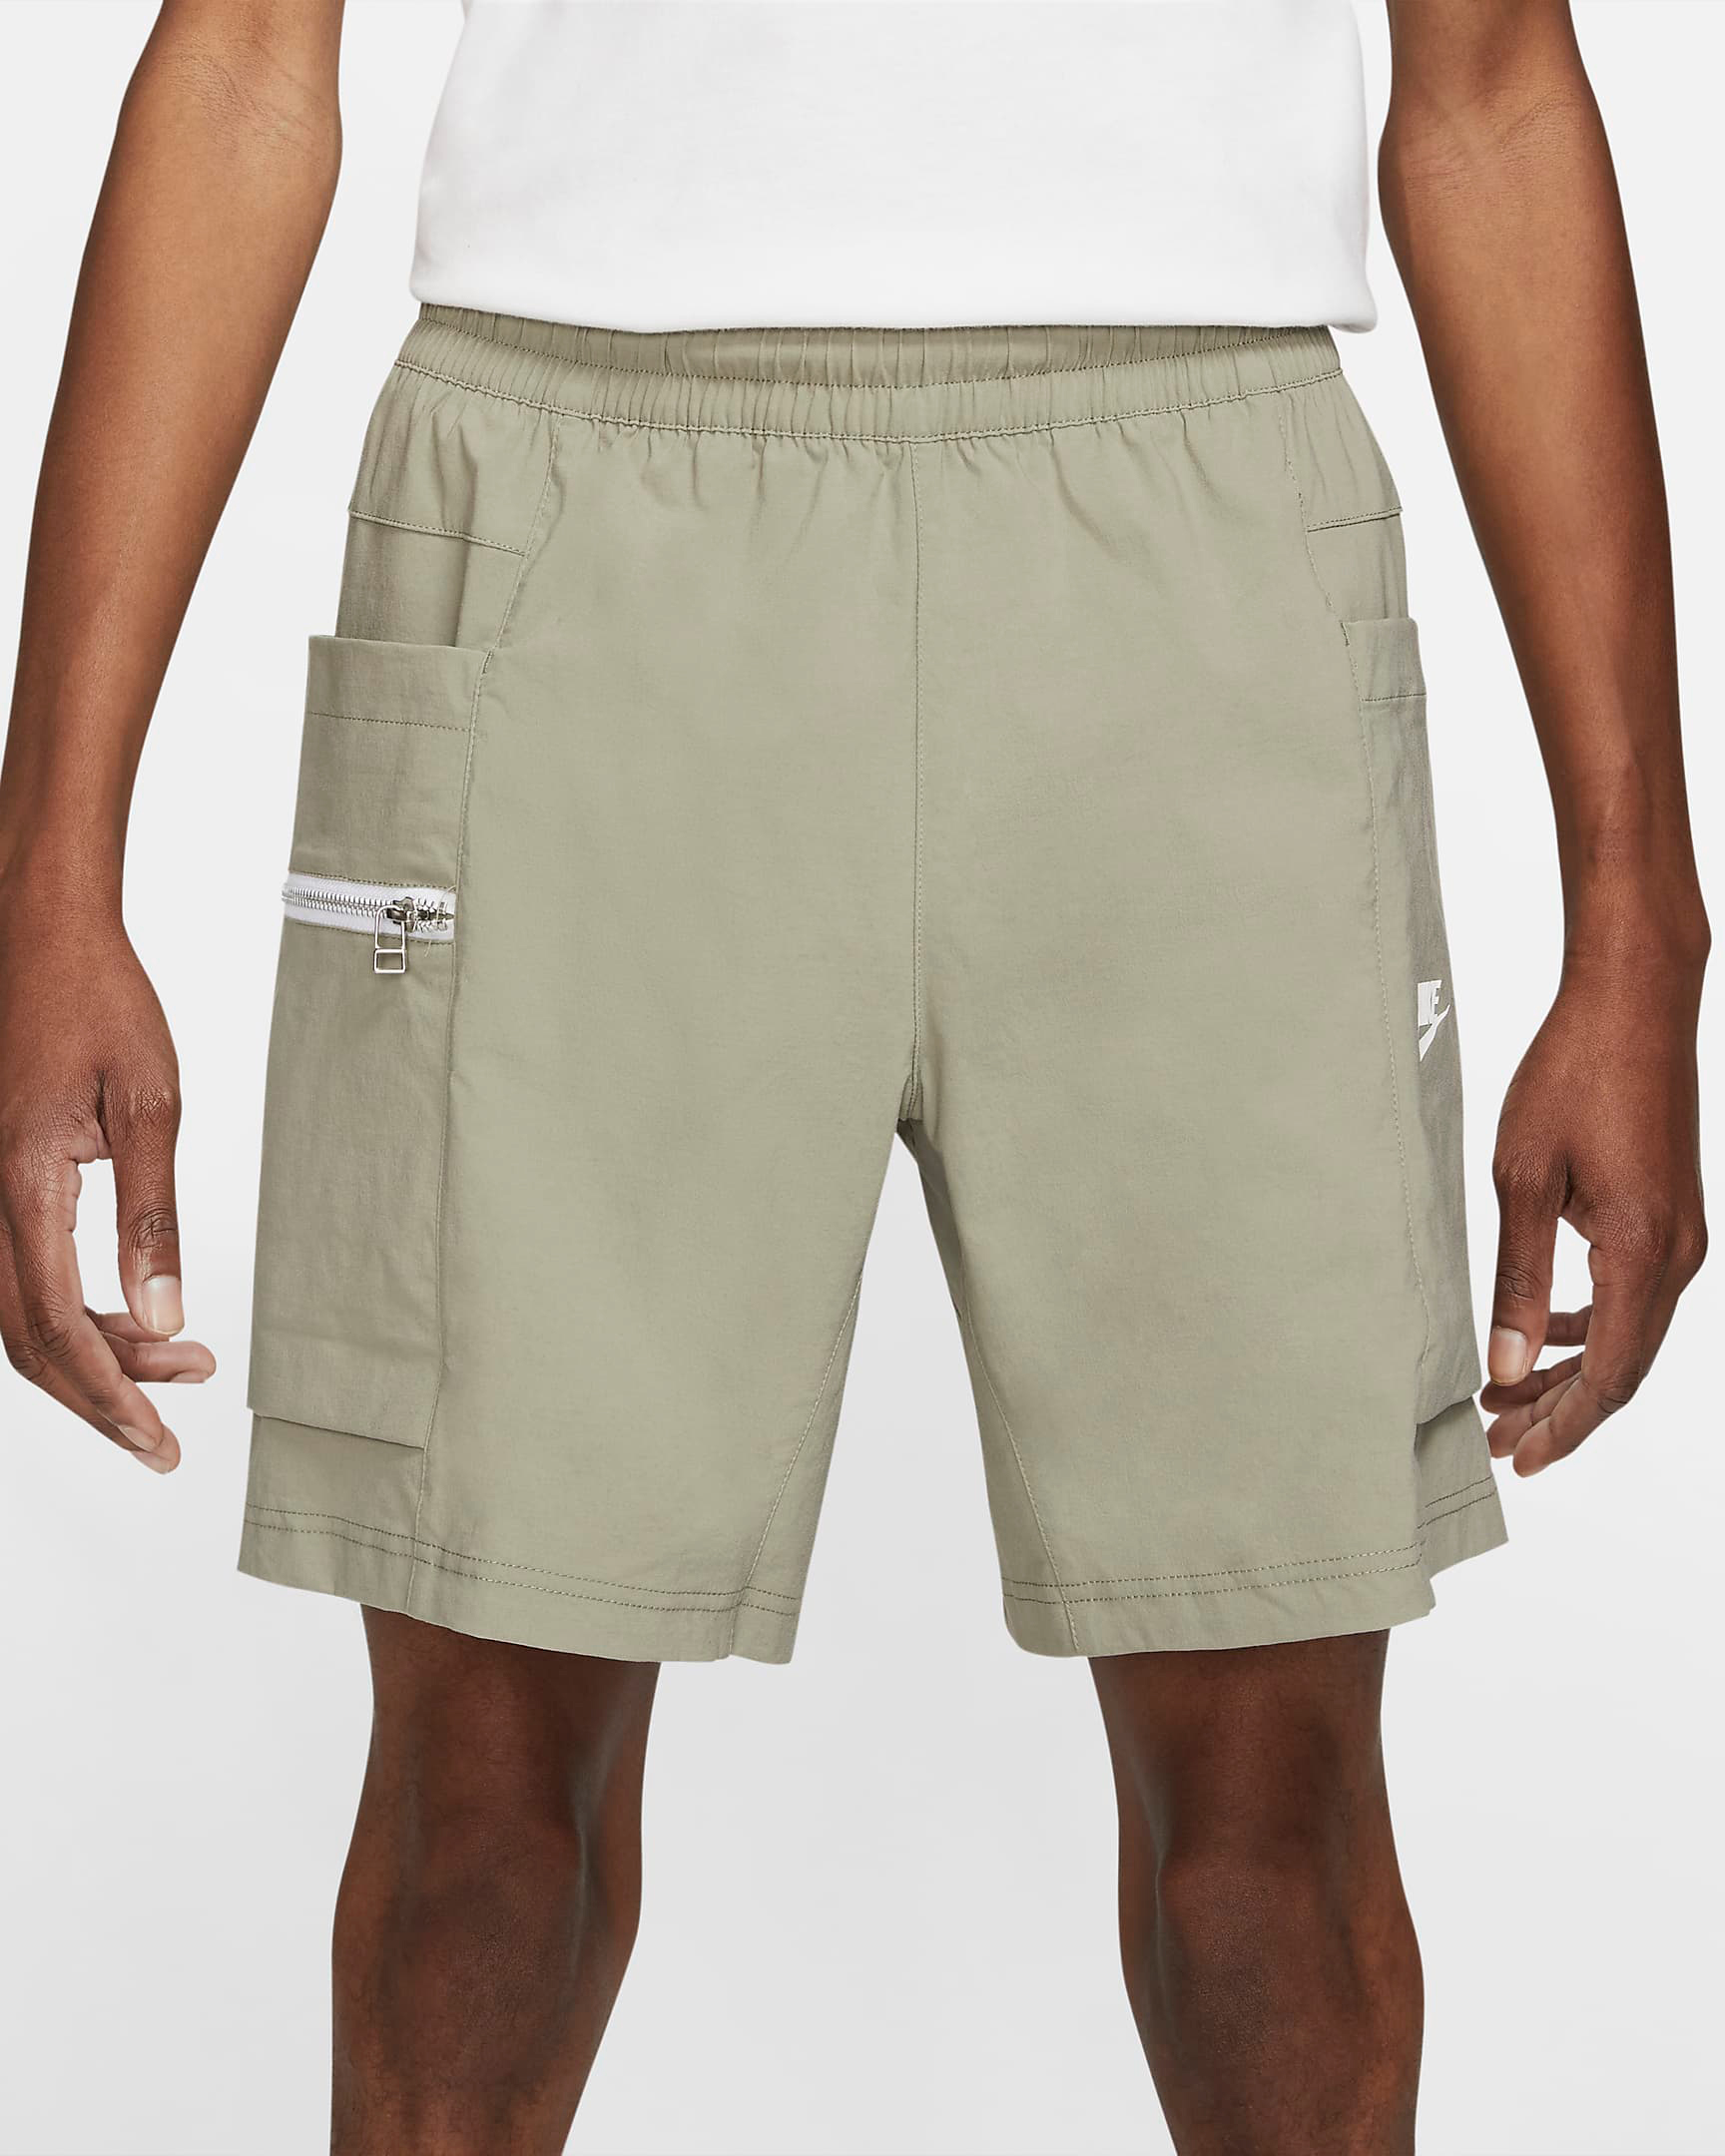 nike-light-army-woven-shorts-1